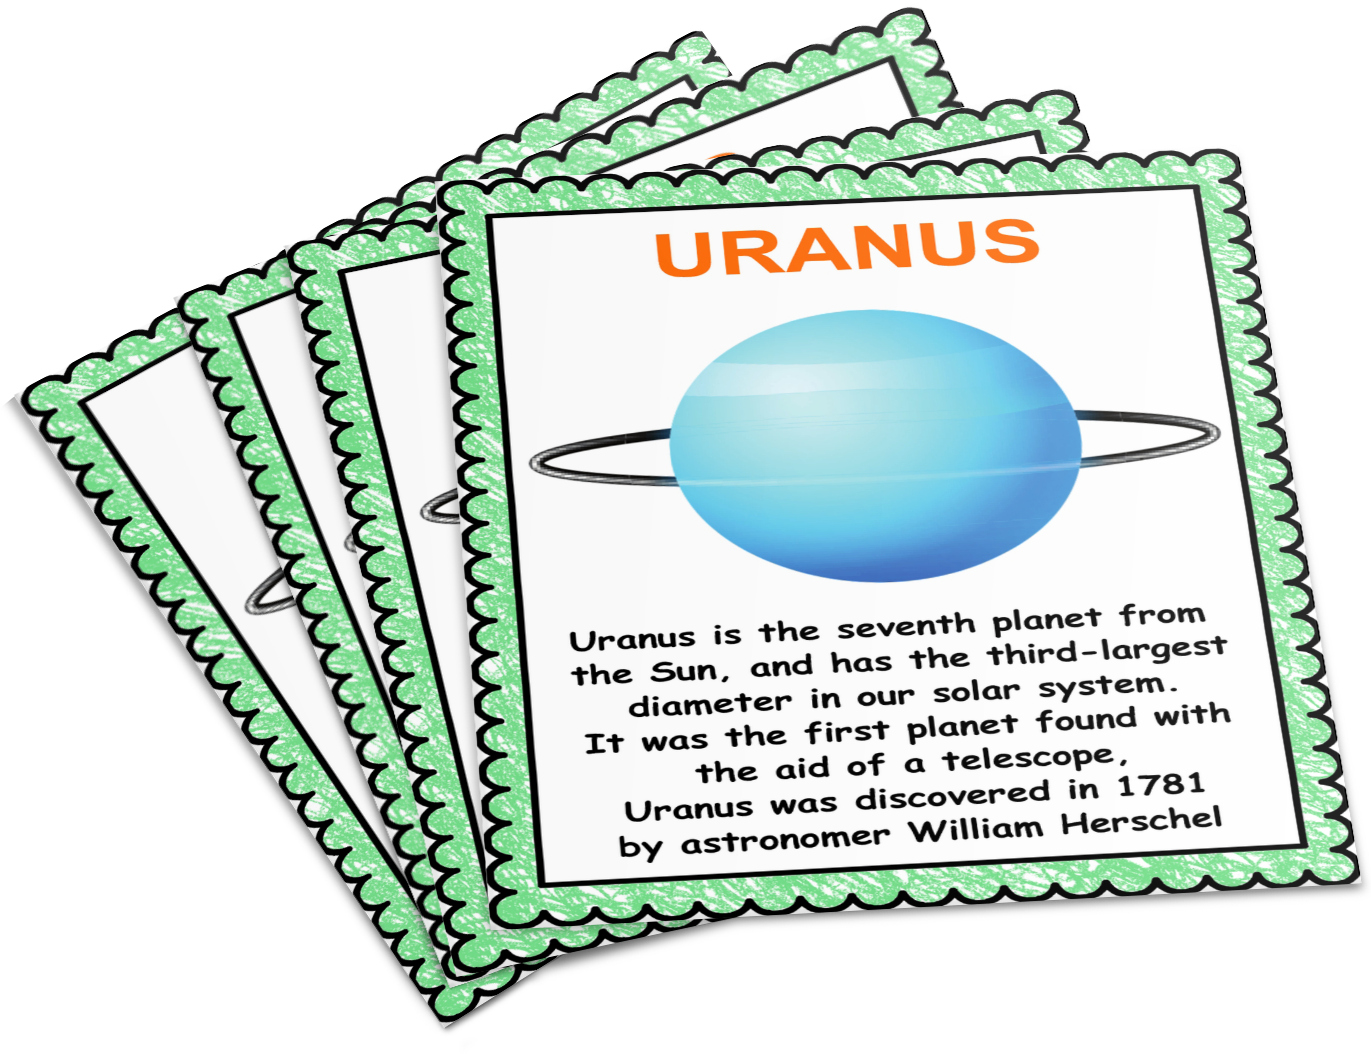 Planet Fun Fact Cards